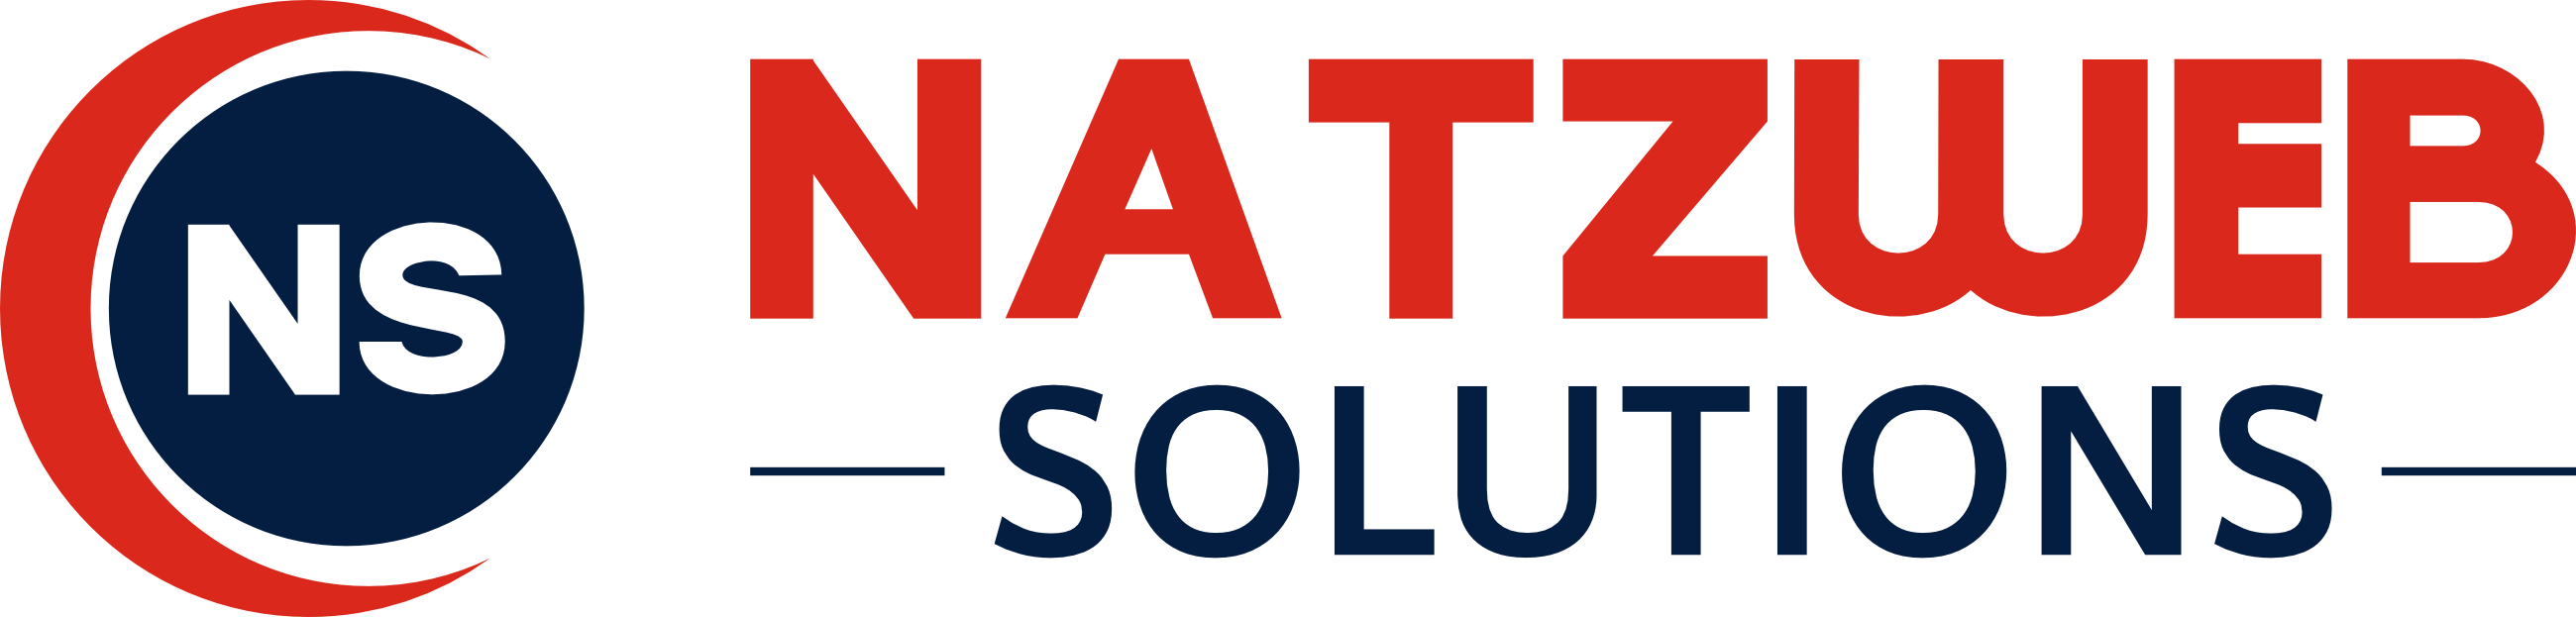 Natzweb Solutions